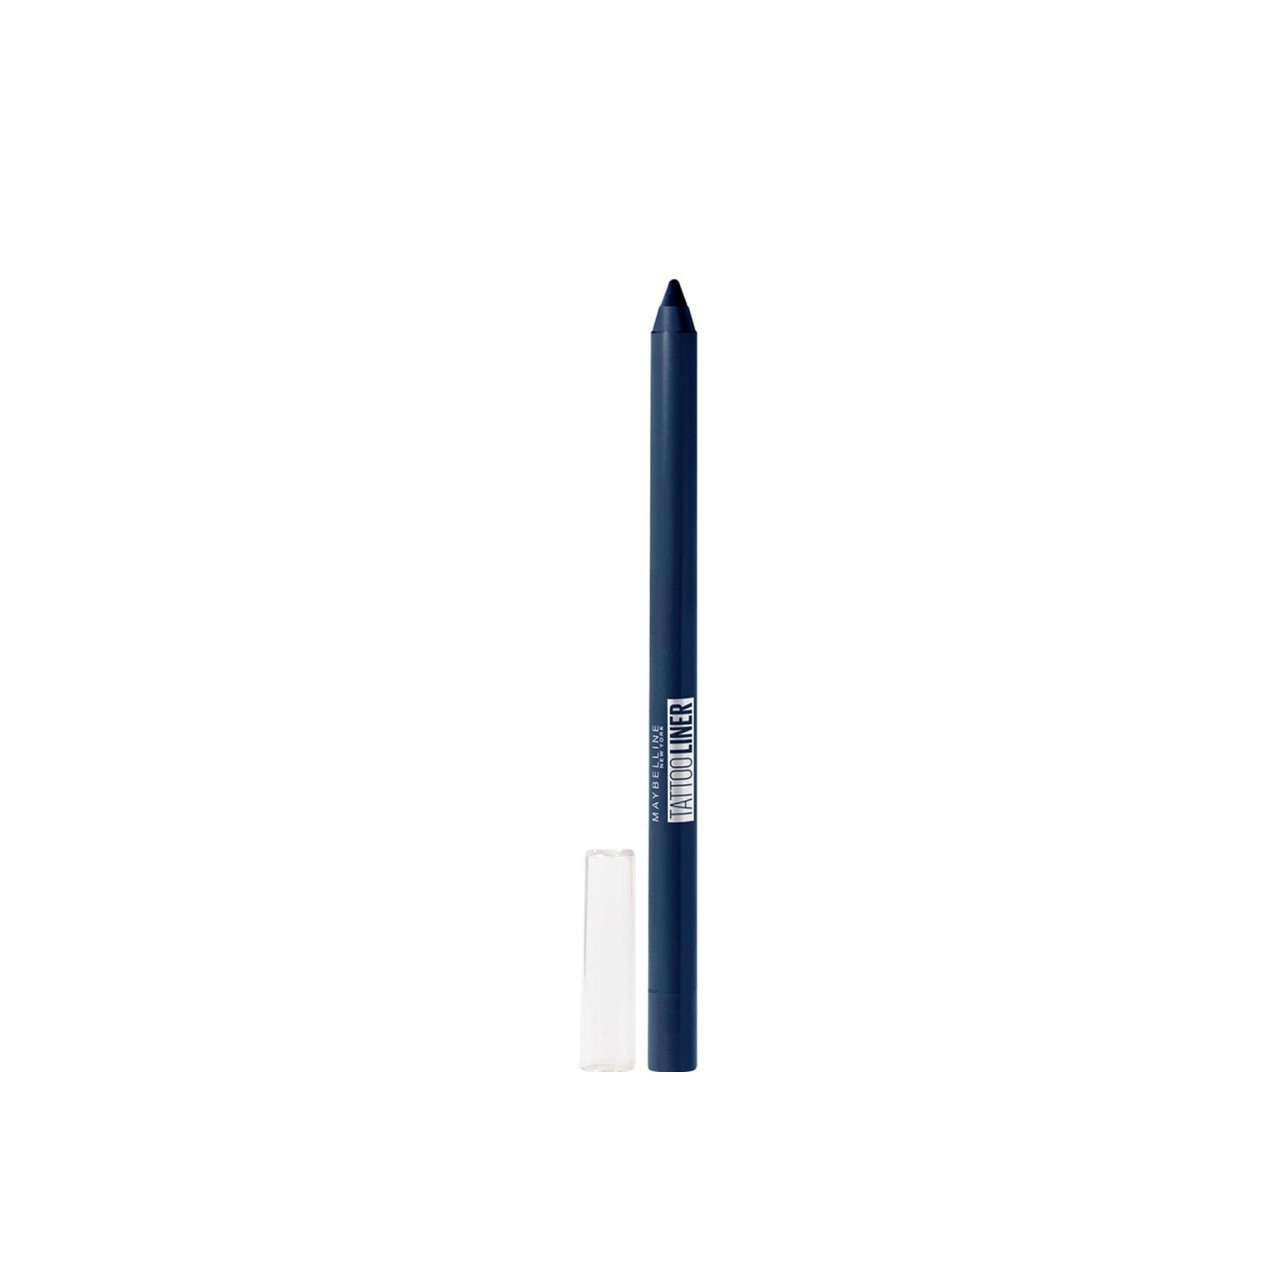 Maybelline Tattoo Liner Gel Pencil Eyeliner 920 Striking Navy 1.3g (0.05oz)